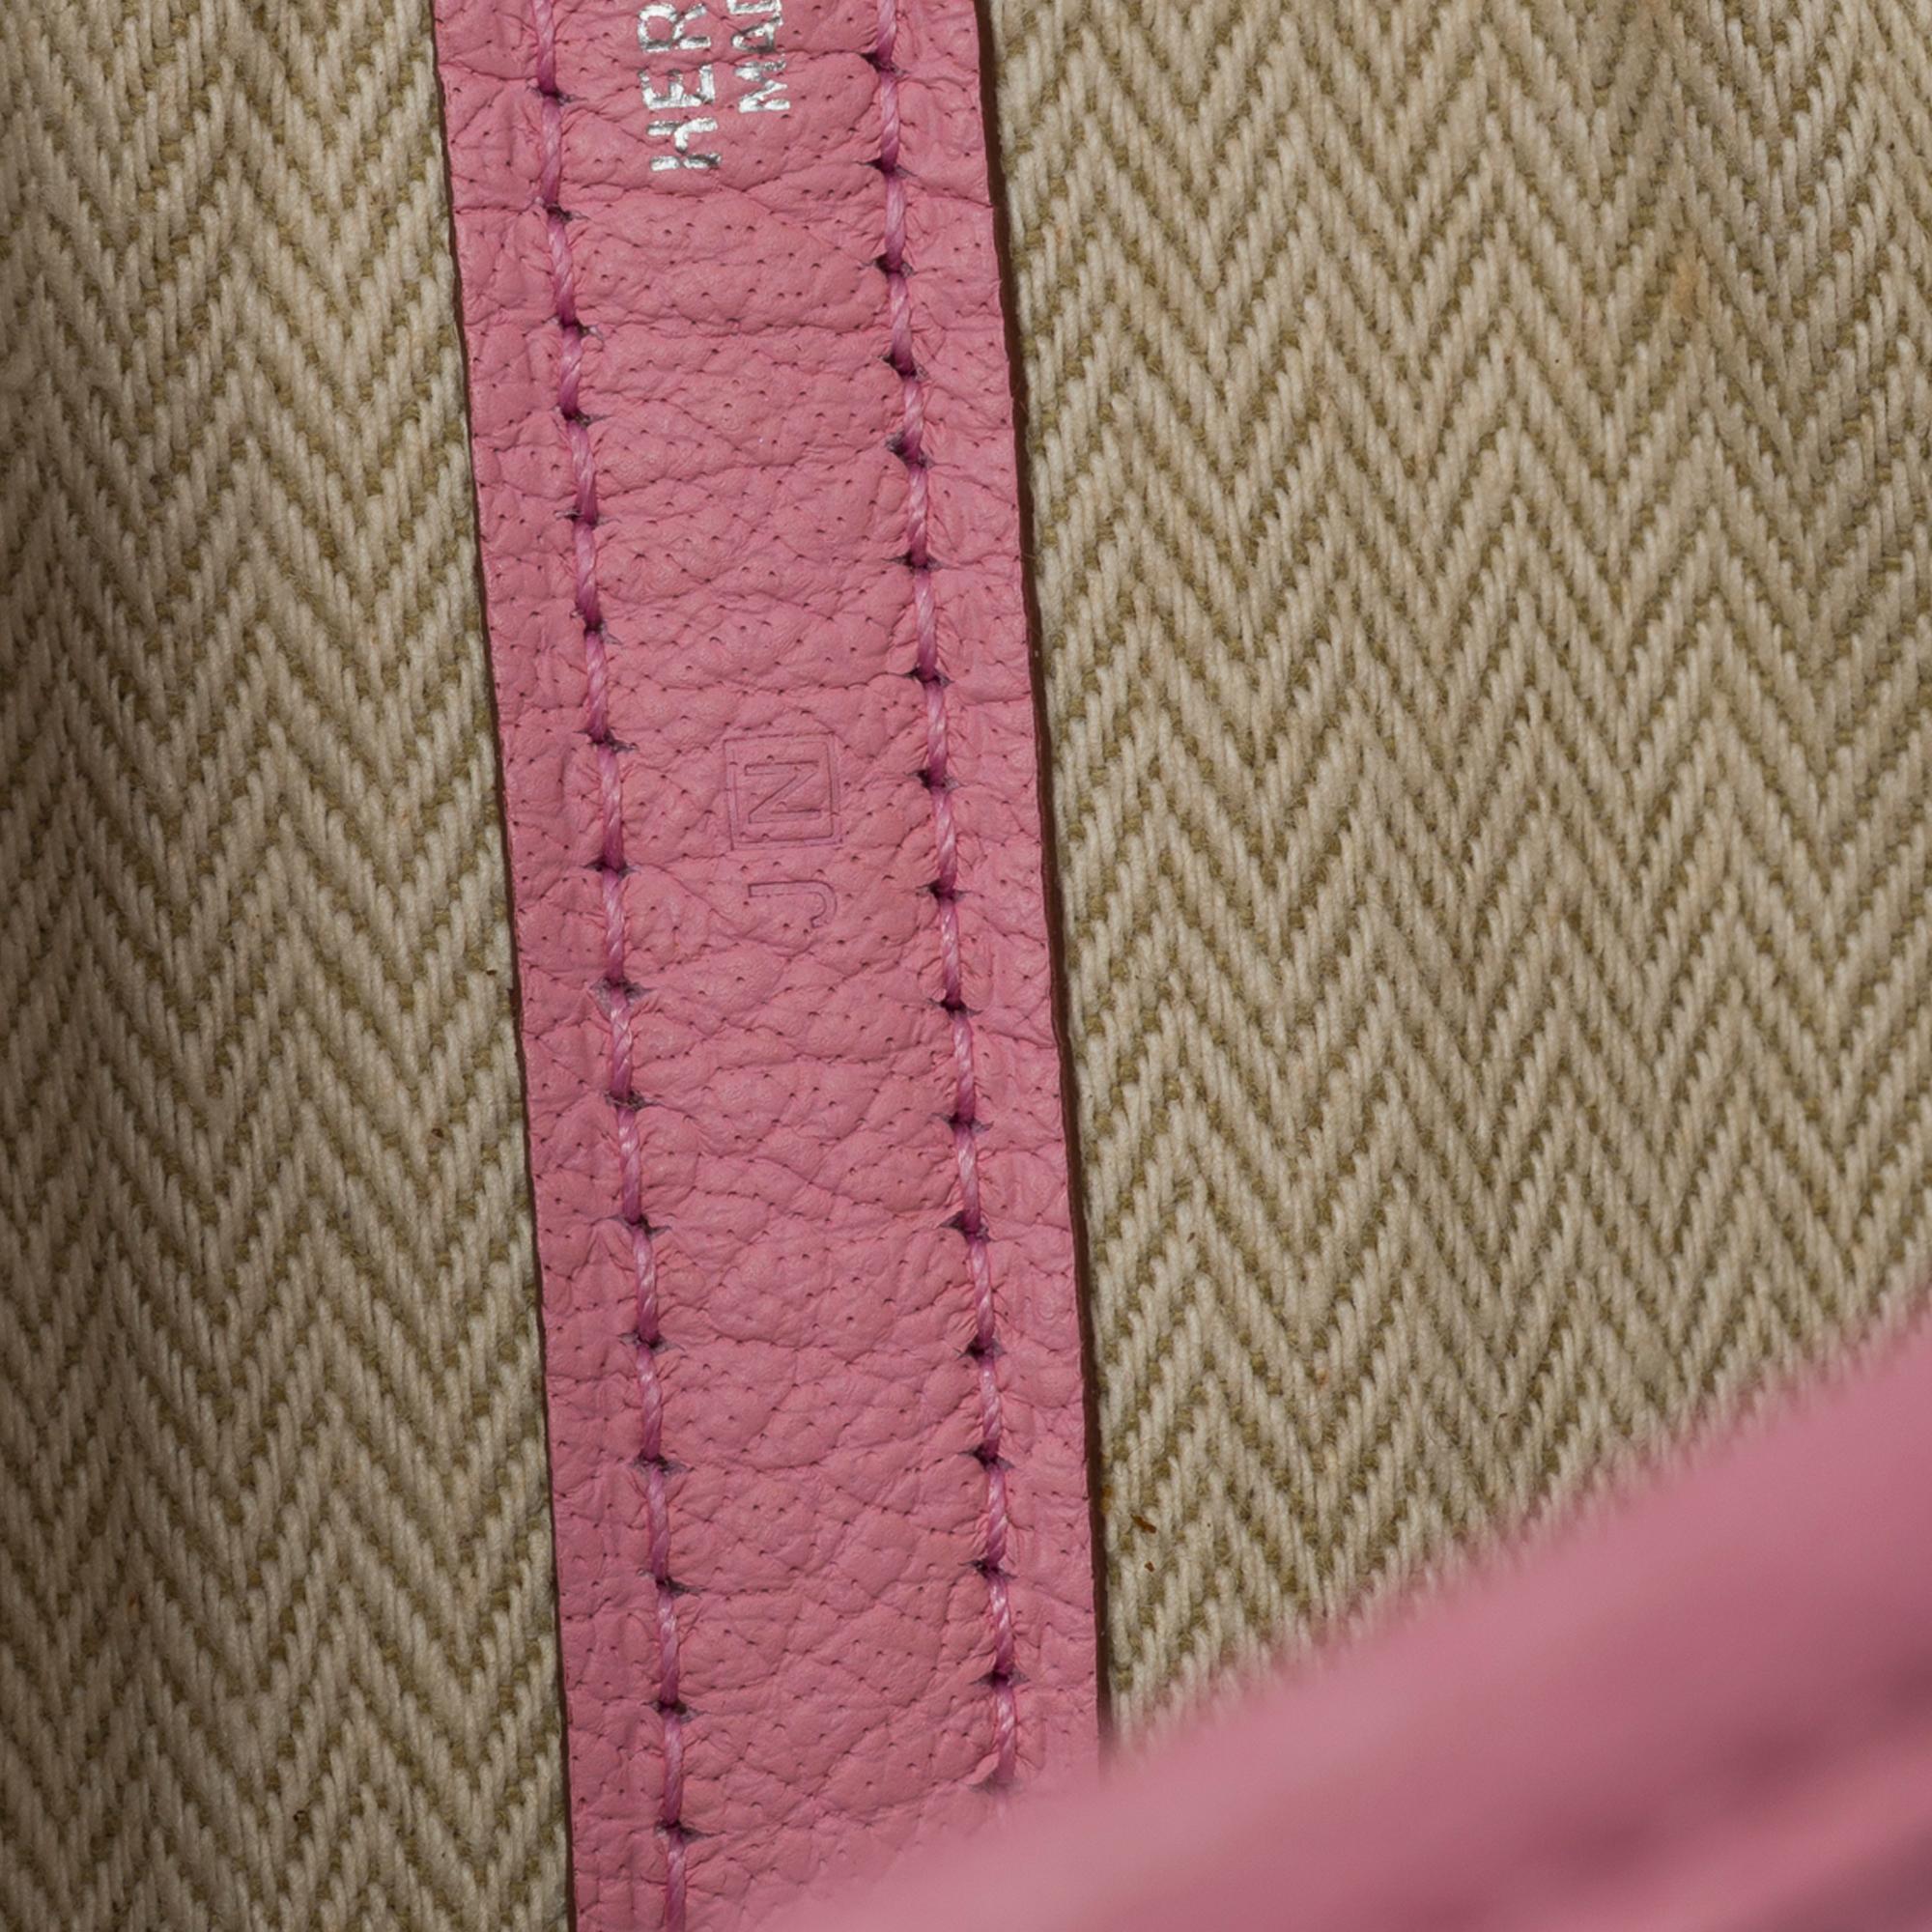 Gorgeous Hermès Garden Party 36 Tote bag in Sakura Pink Negonda leather, SHW 2